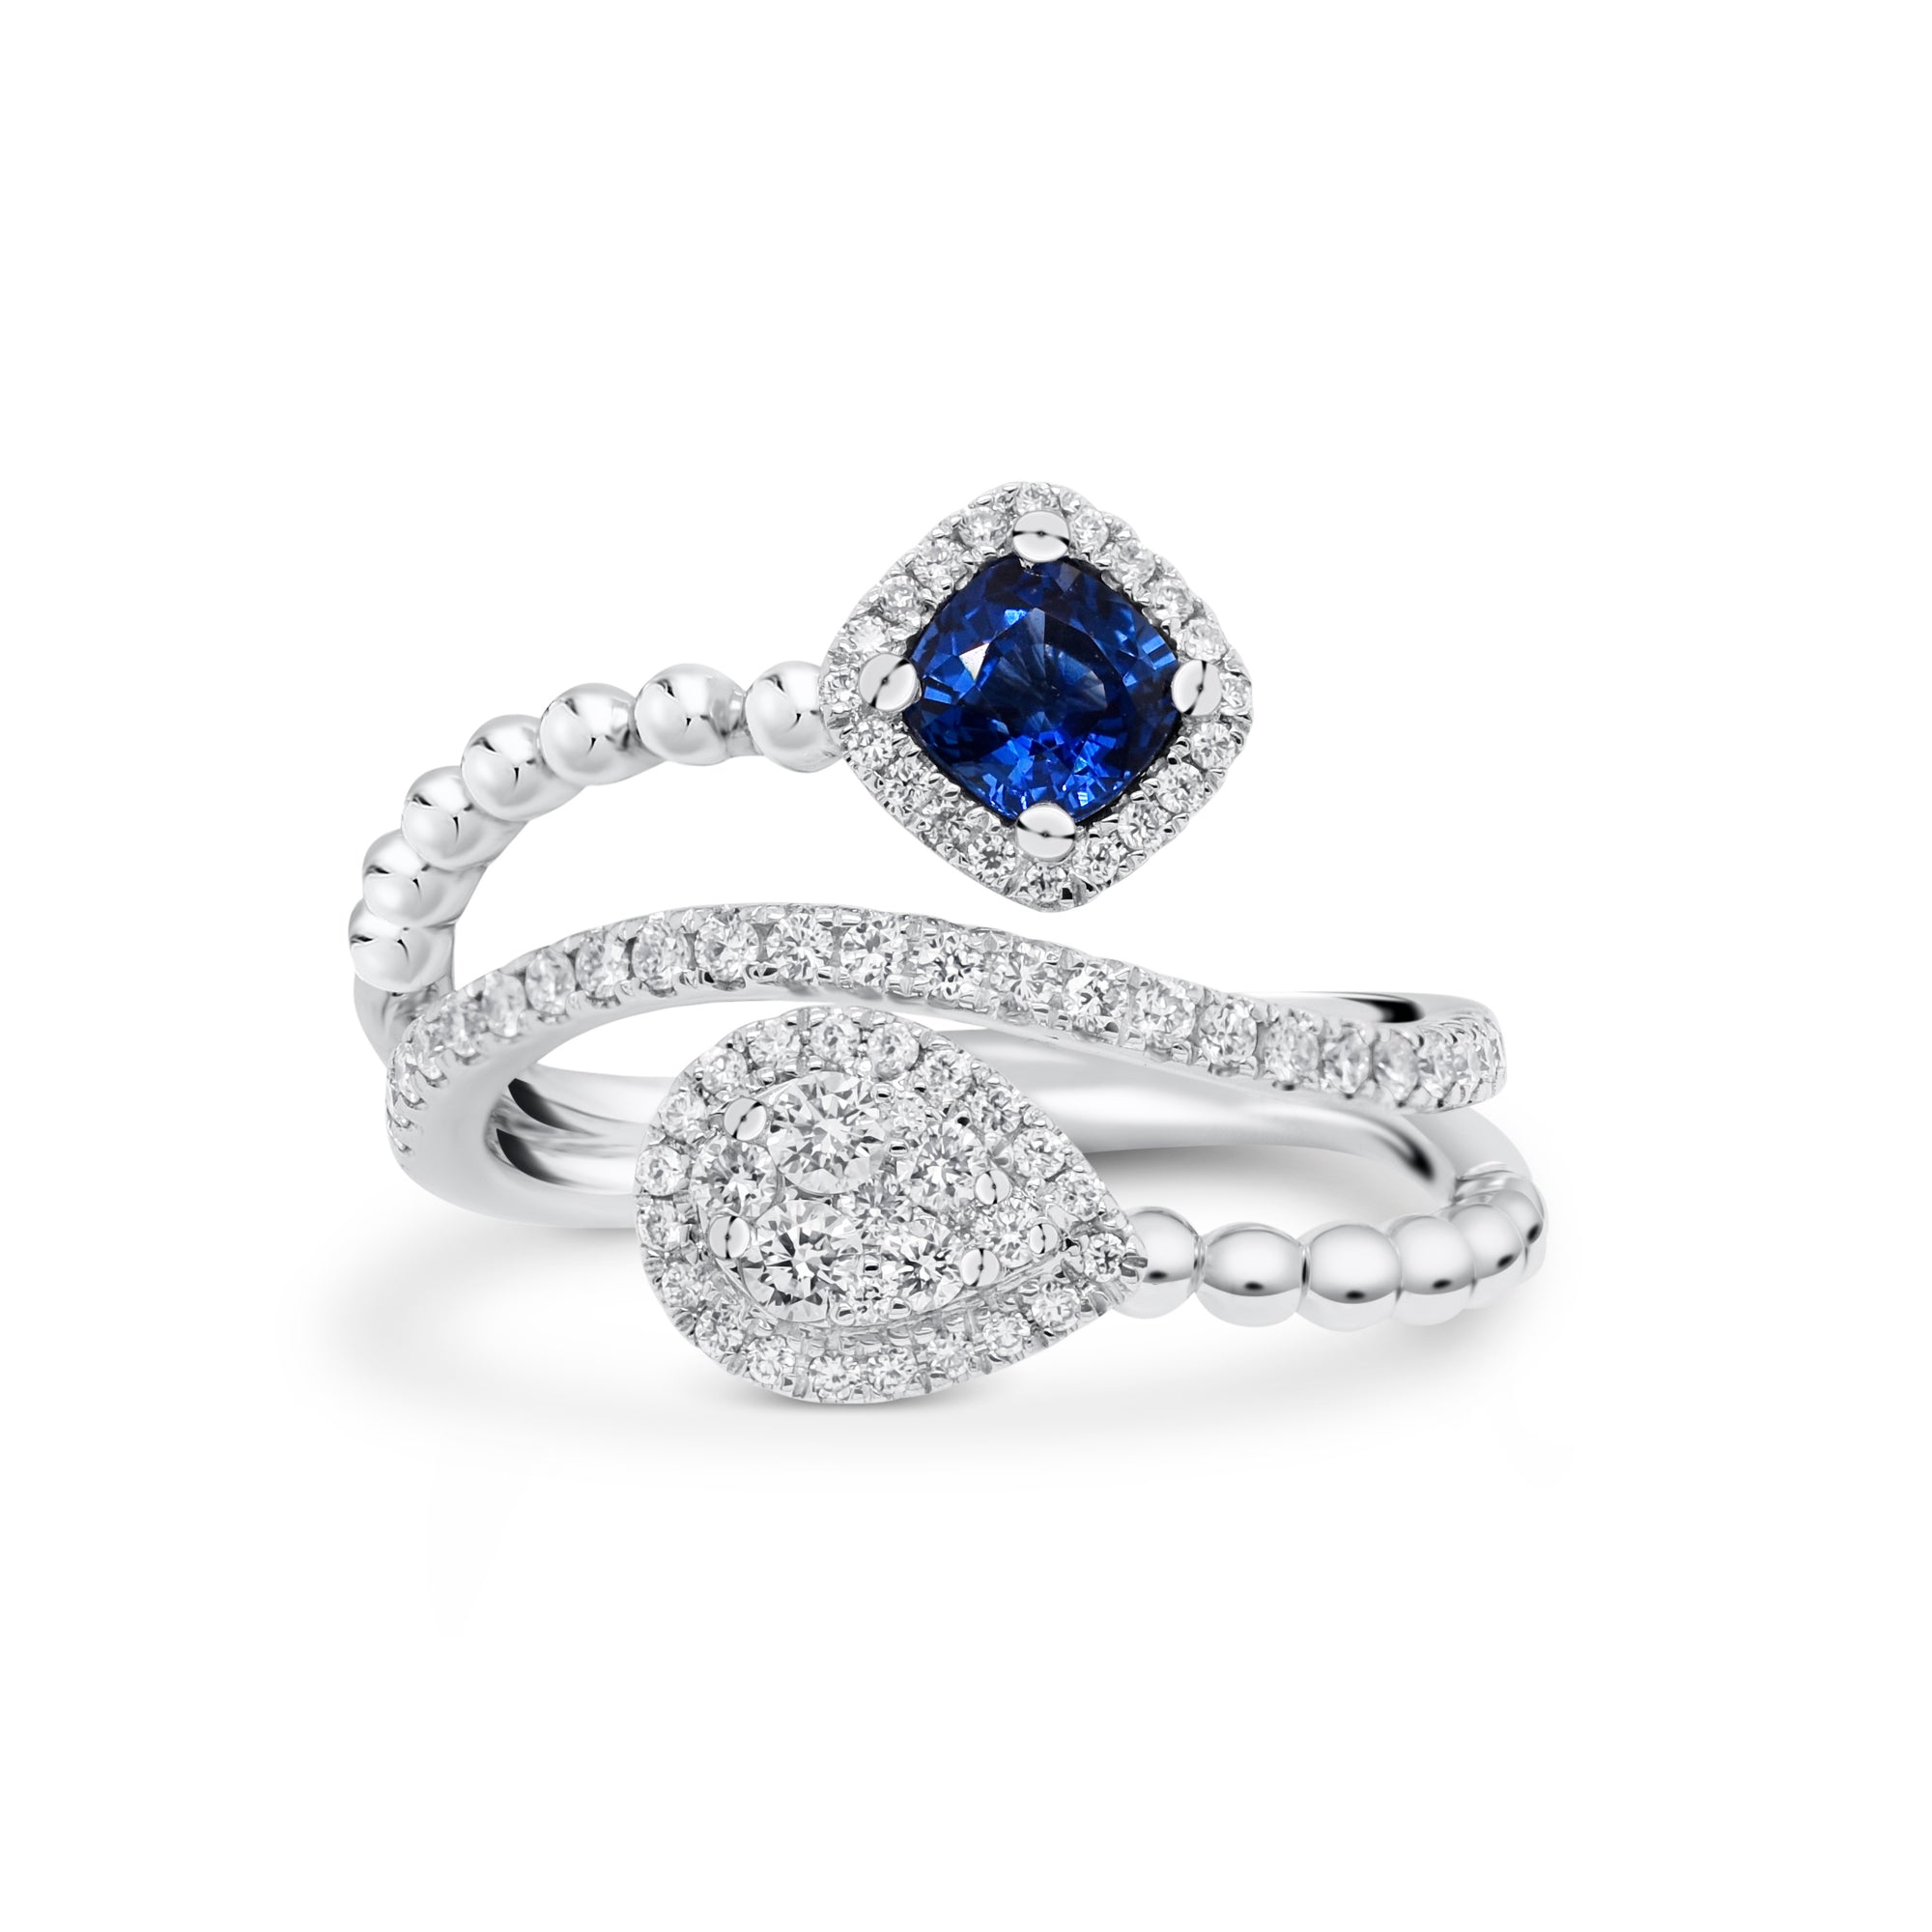 Sapphire cushion & diamond teardrop bypass ring - 18K gold weighing 4.94 grams  - 75 round diamonds totaling 0.41 carats  - 0.49 ct cushion brilliant-cut sapphire